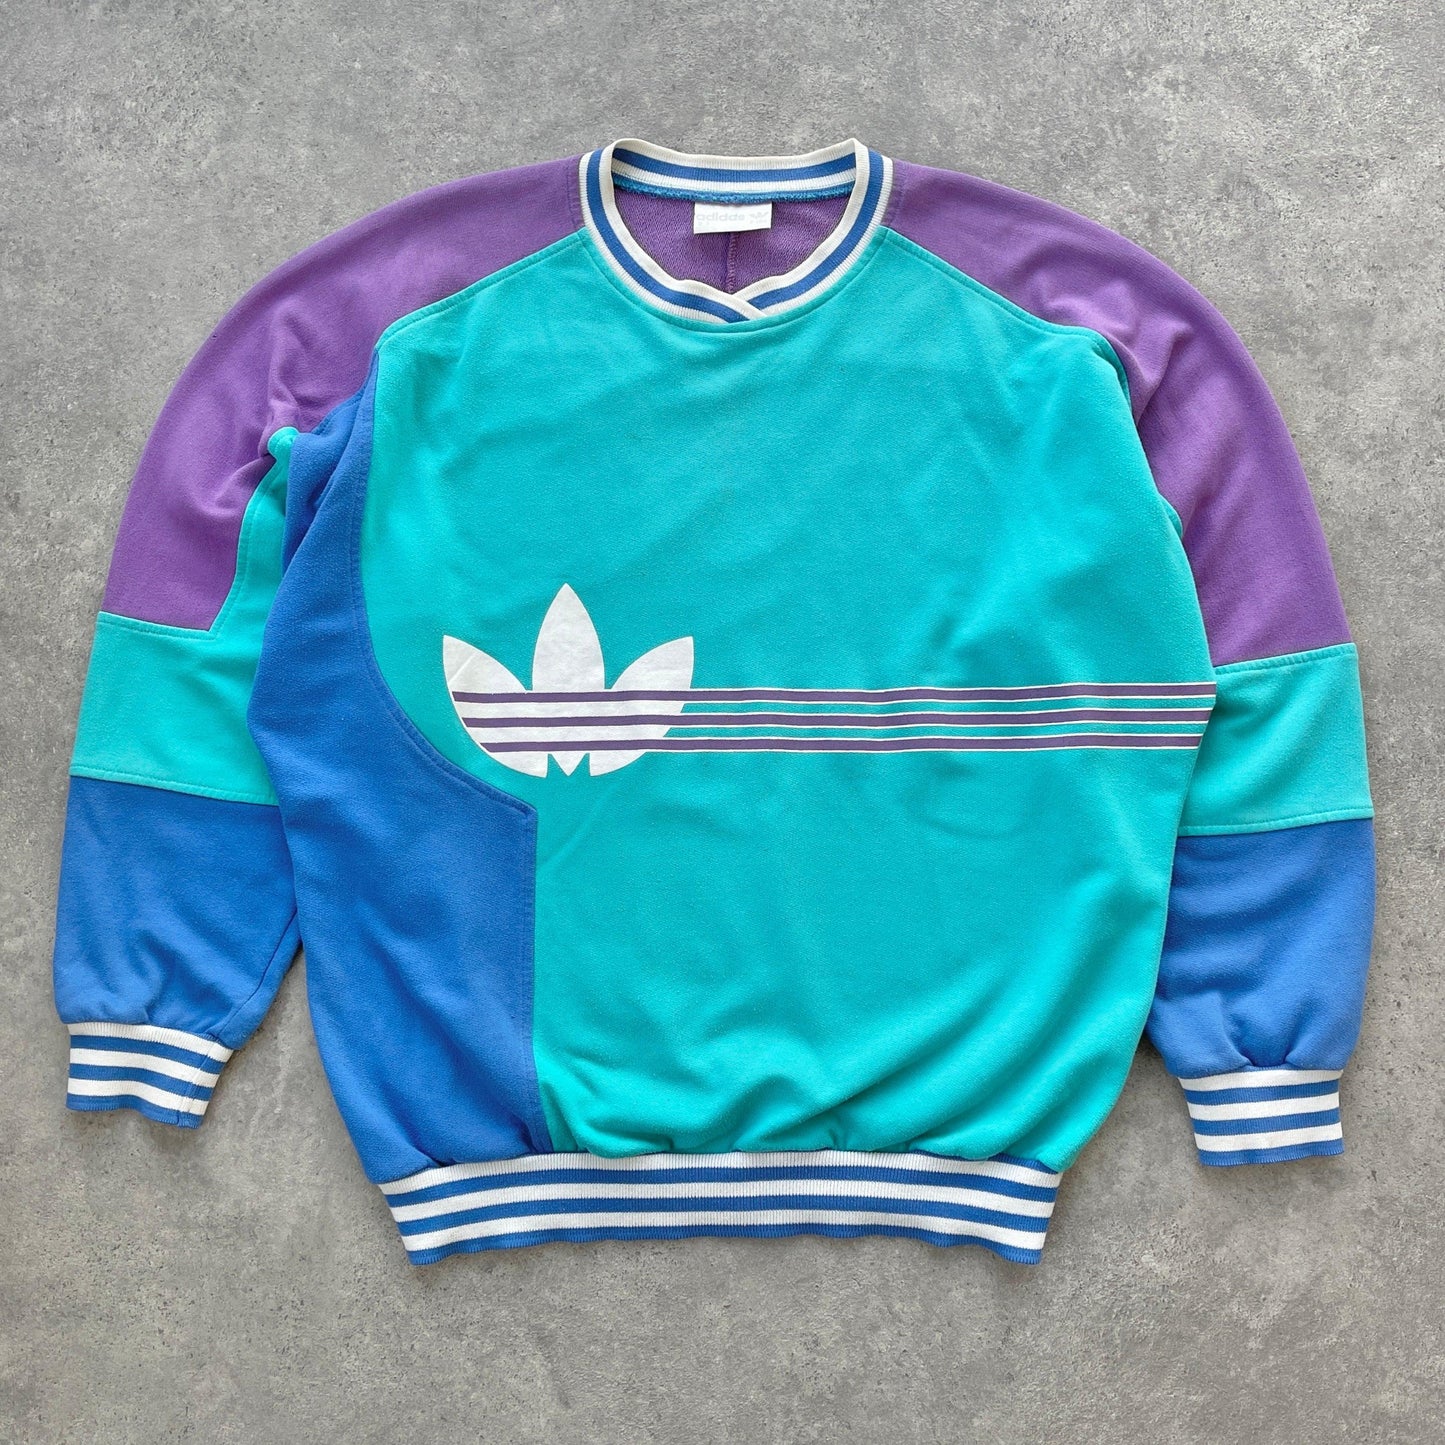 Adidas 1990s heavyweight colour block sweatshirt (XL) - Known Source